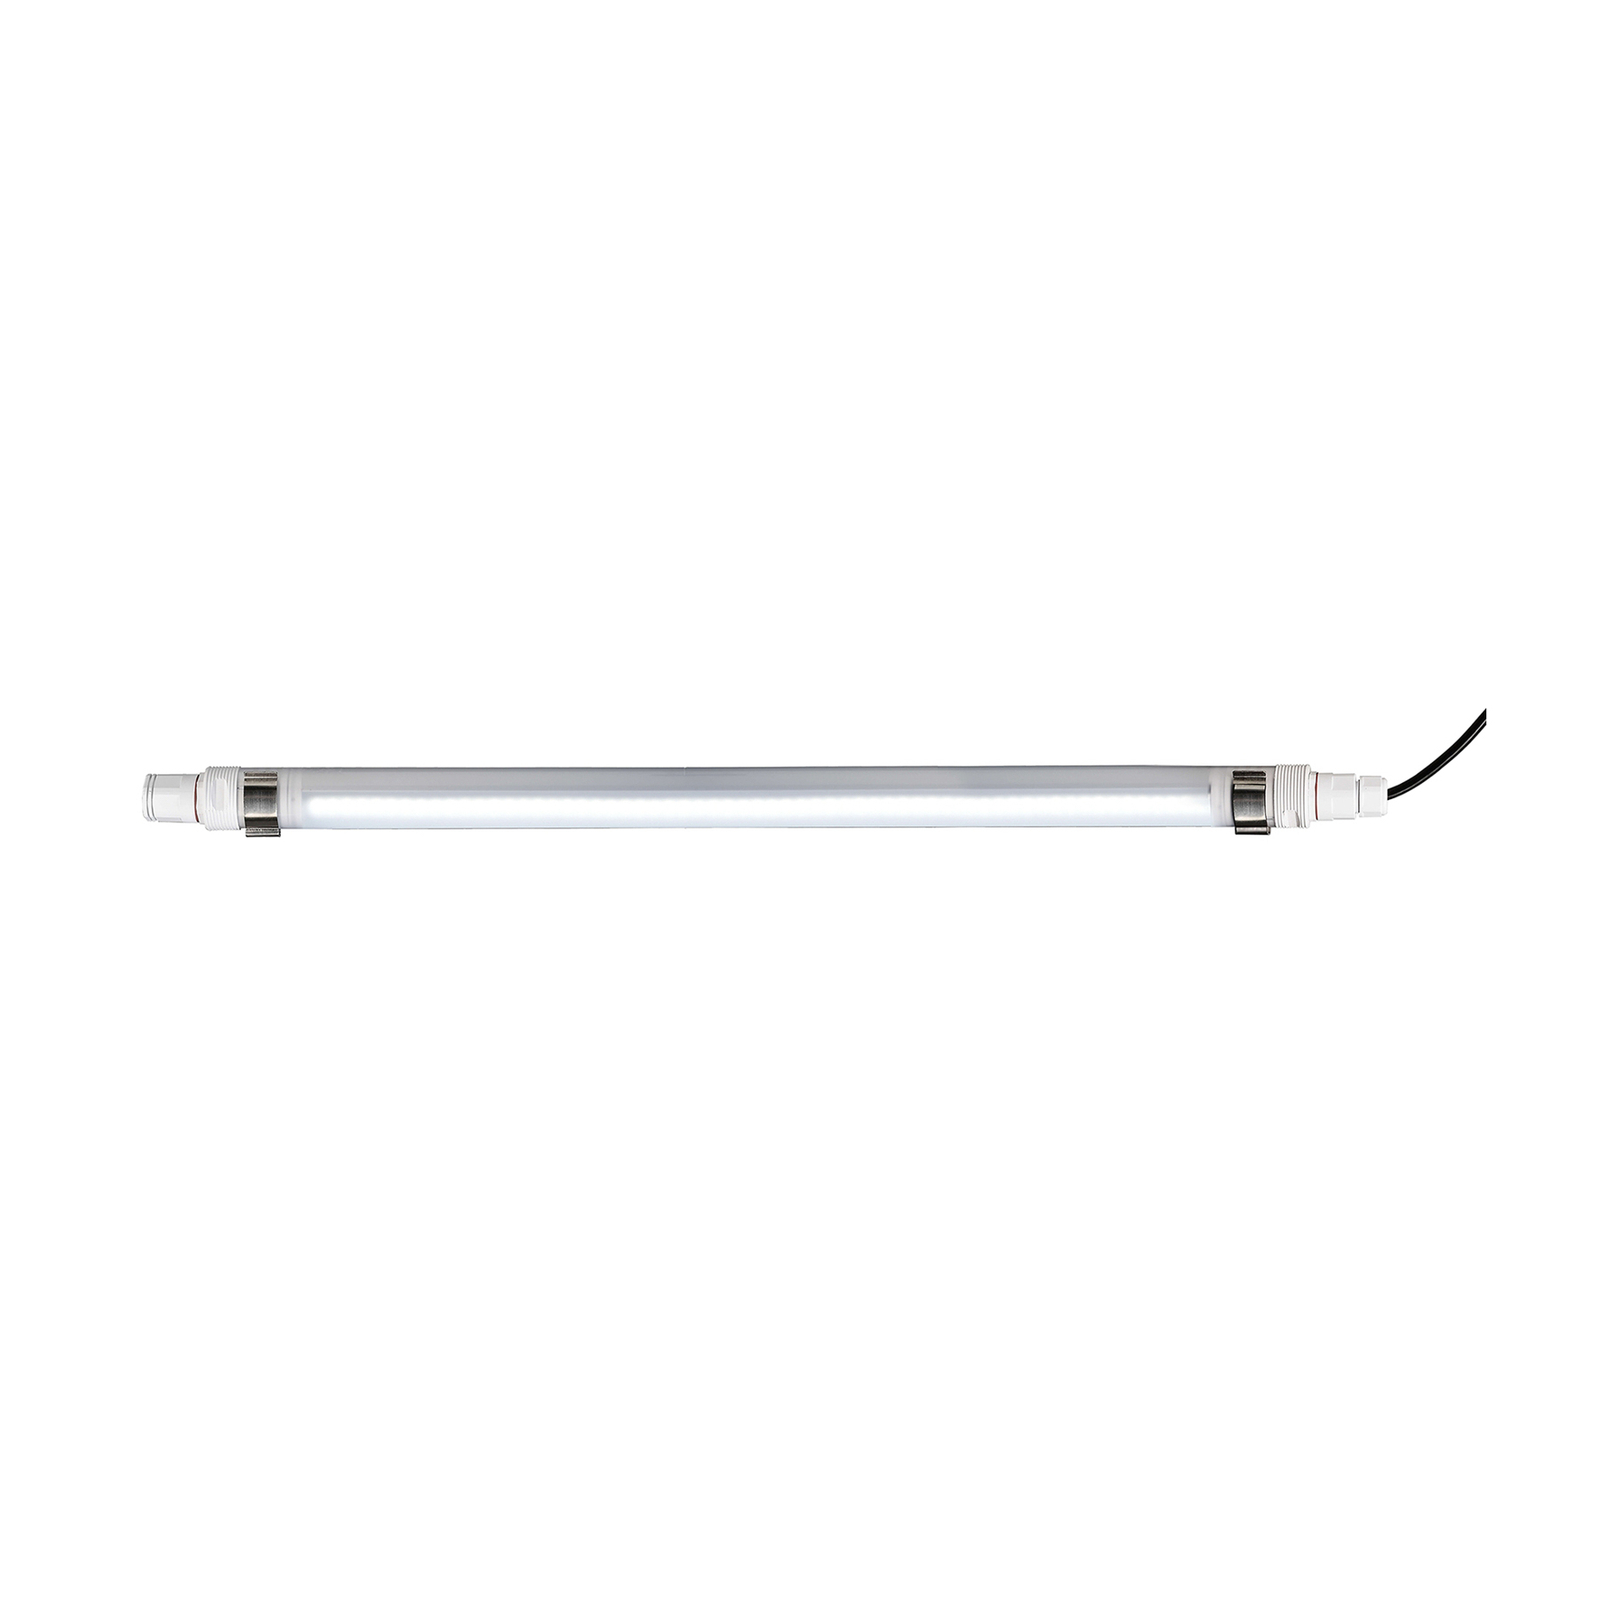 Tri Proof Slim LED moisture-proof lamp length 70cm